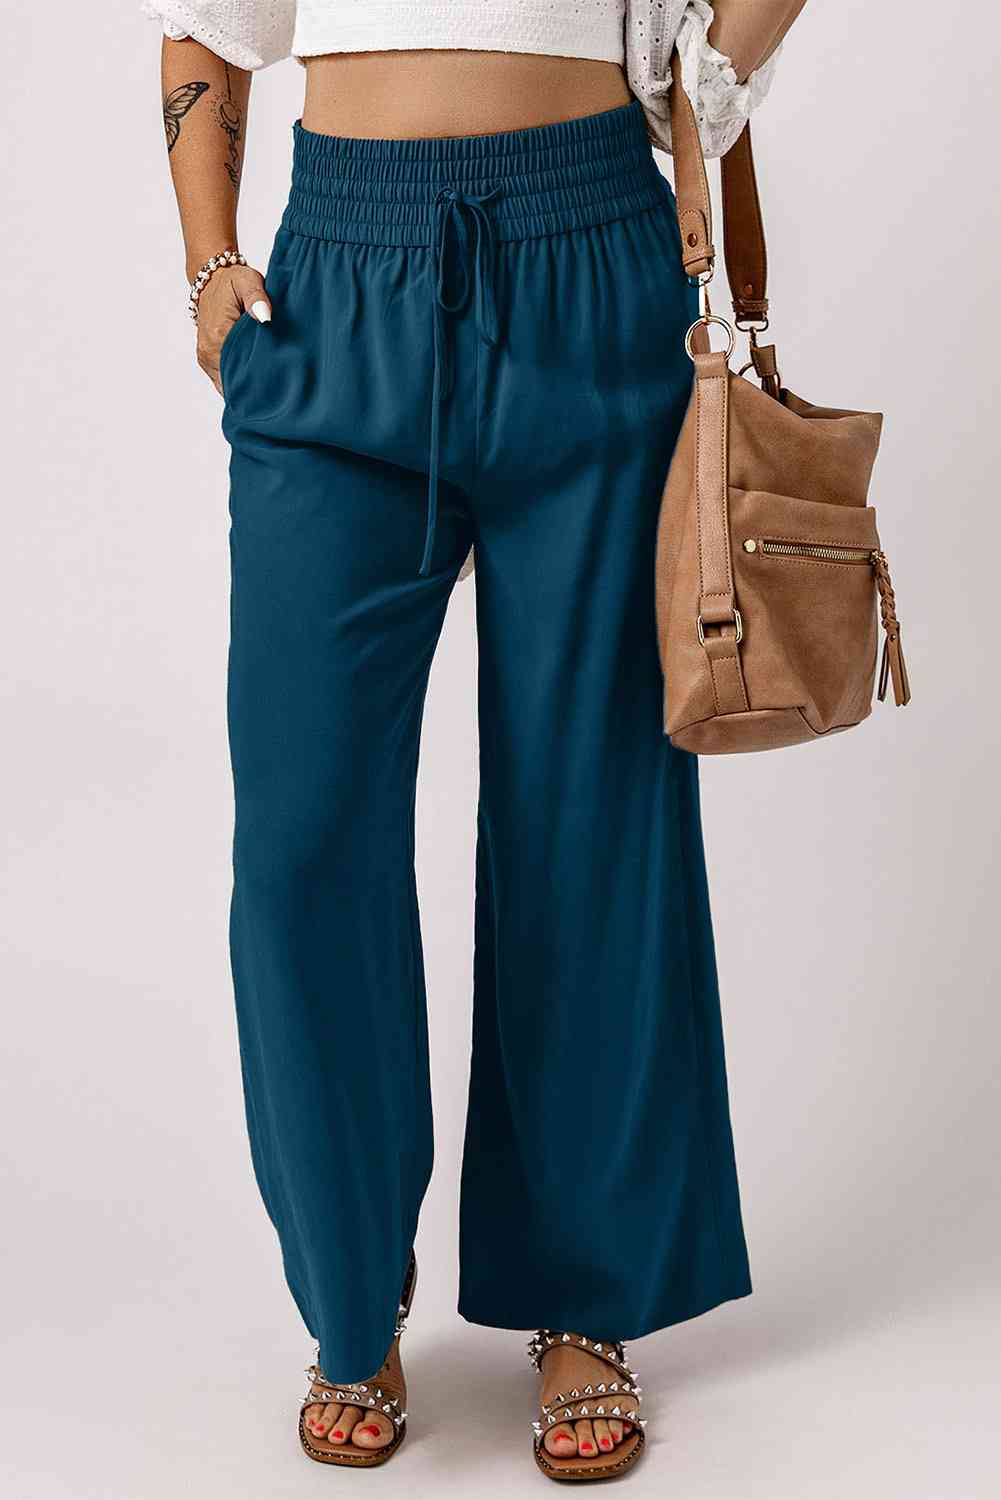 Drawstring Smocked Waist Wide Leg Pants (3 Colors) pants Krazy Heart Designs Boutique Deep Teal S 